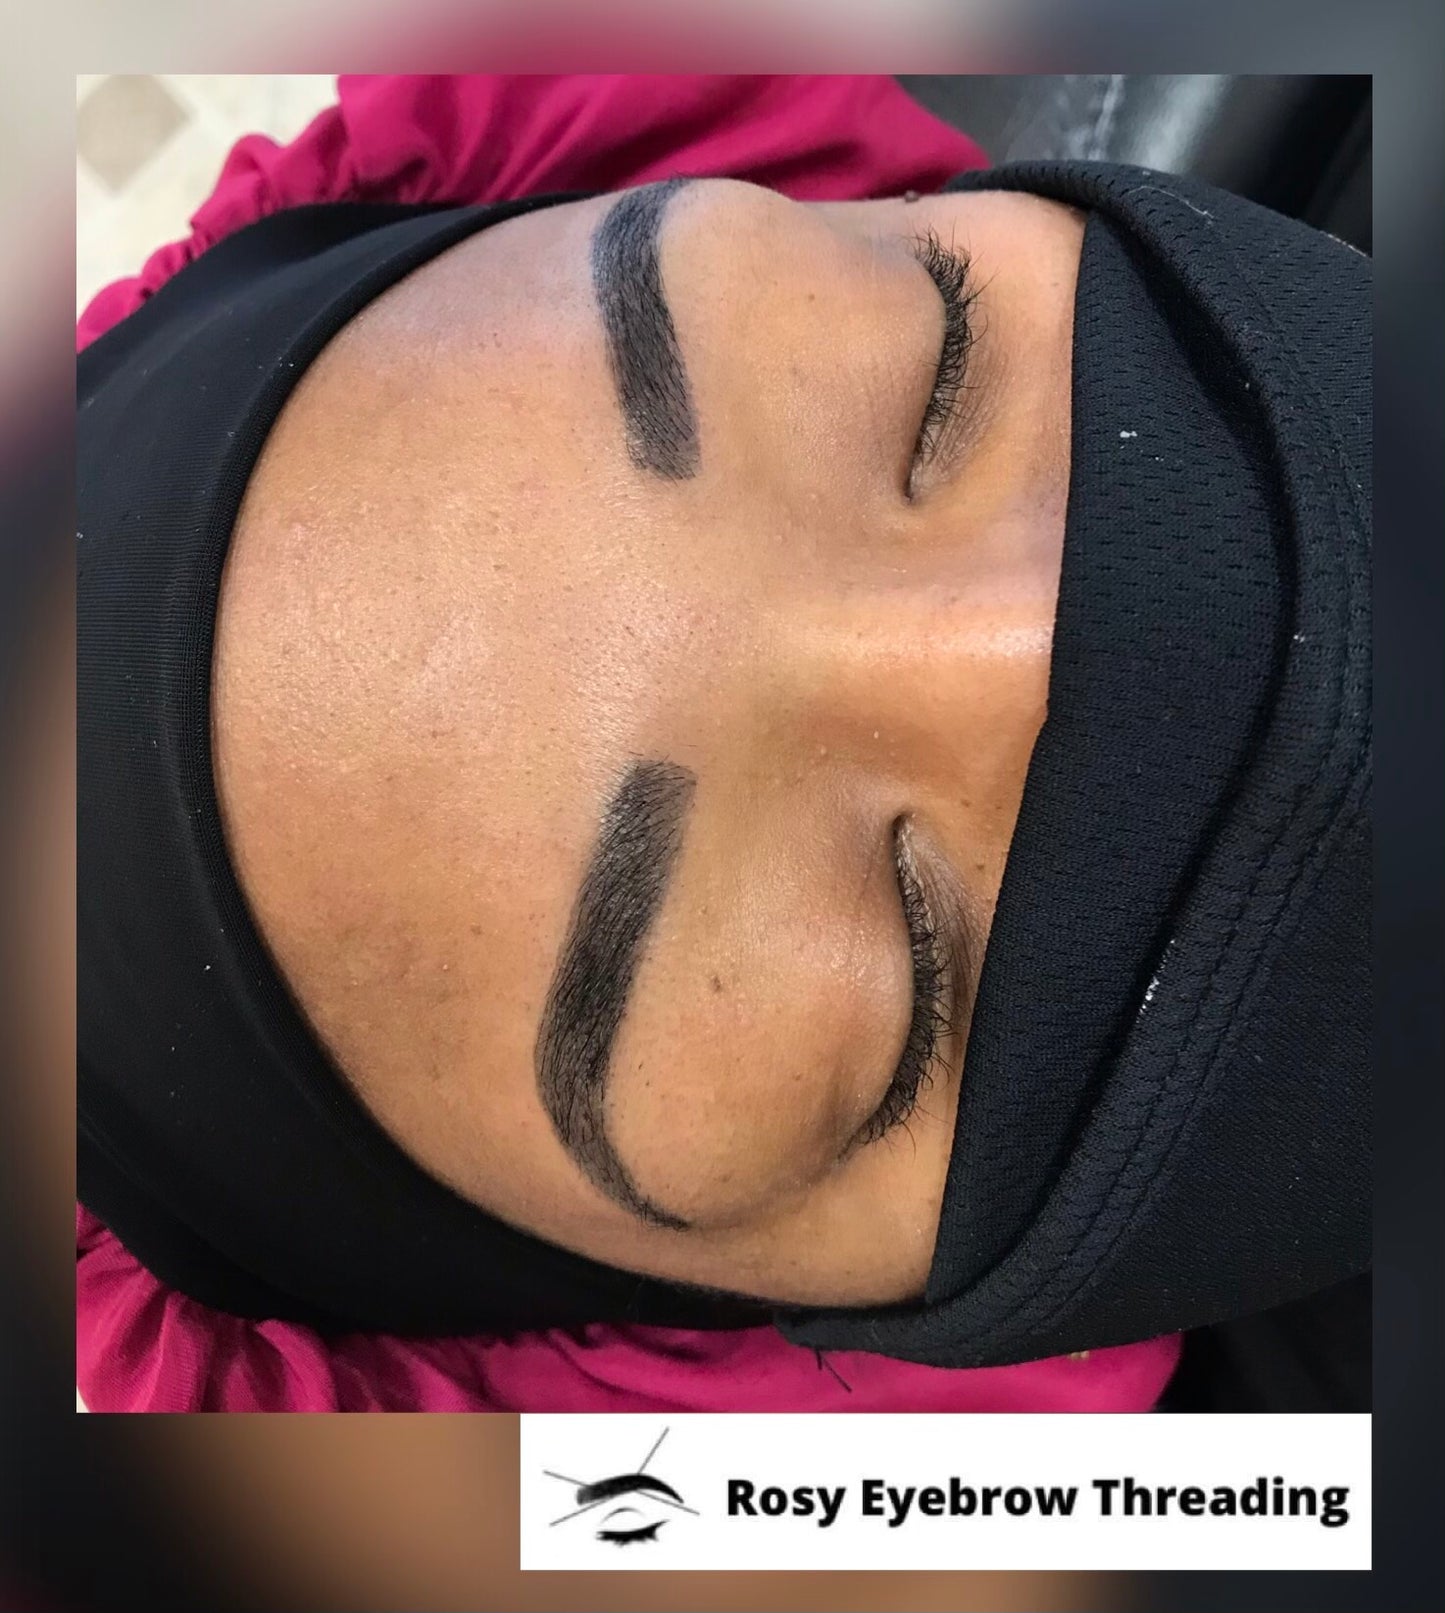 rosy eyebrow threading | Best eyebrow threading in Las Vegas